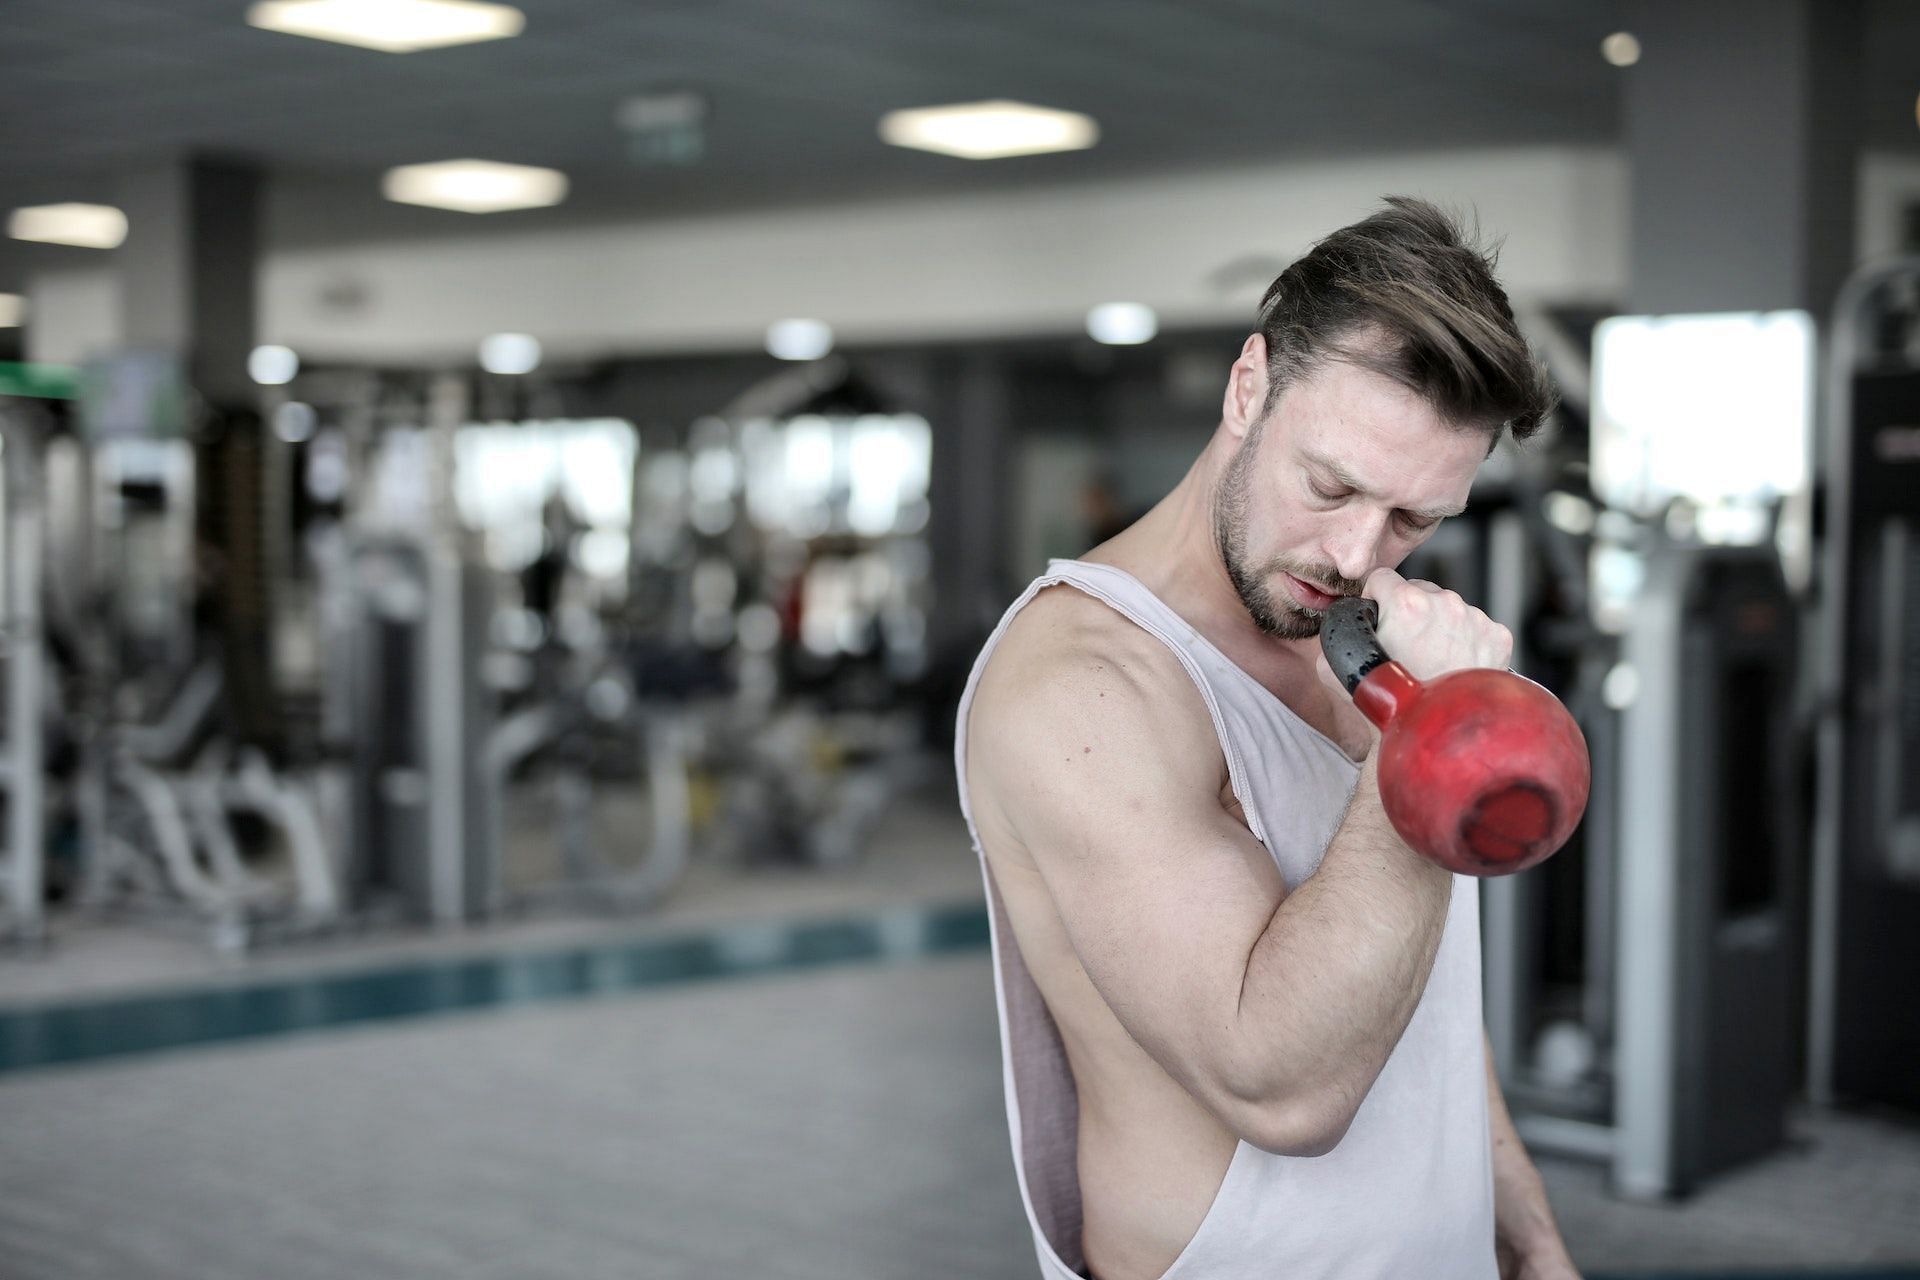 Bent-over rows target the biceps. (Photo via Pexels/Andrea Piacquadio)